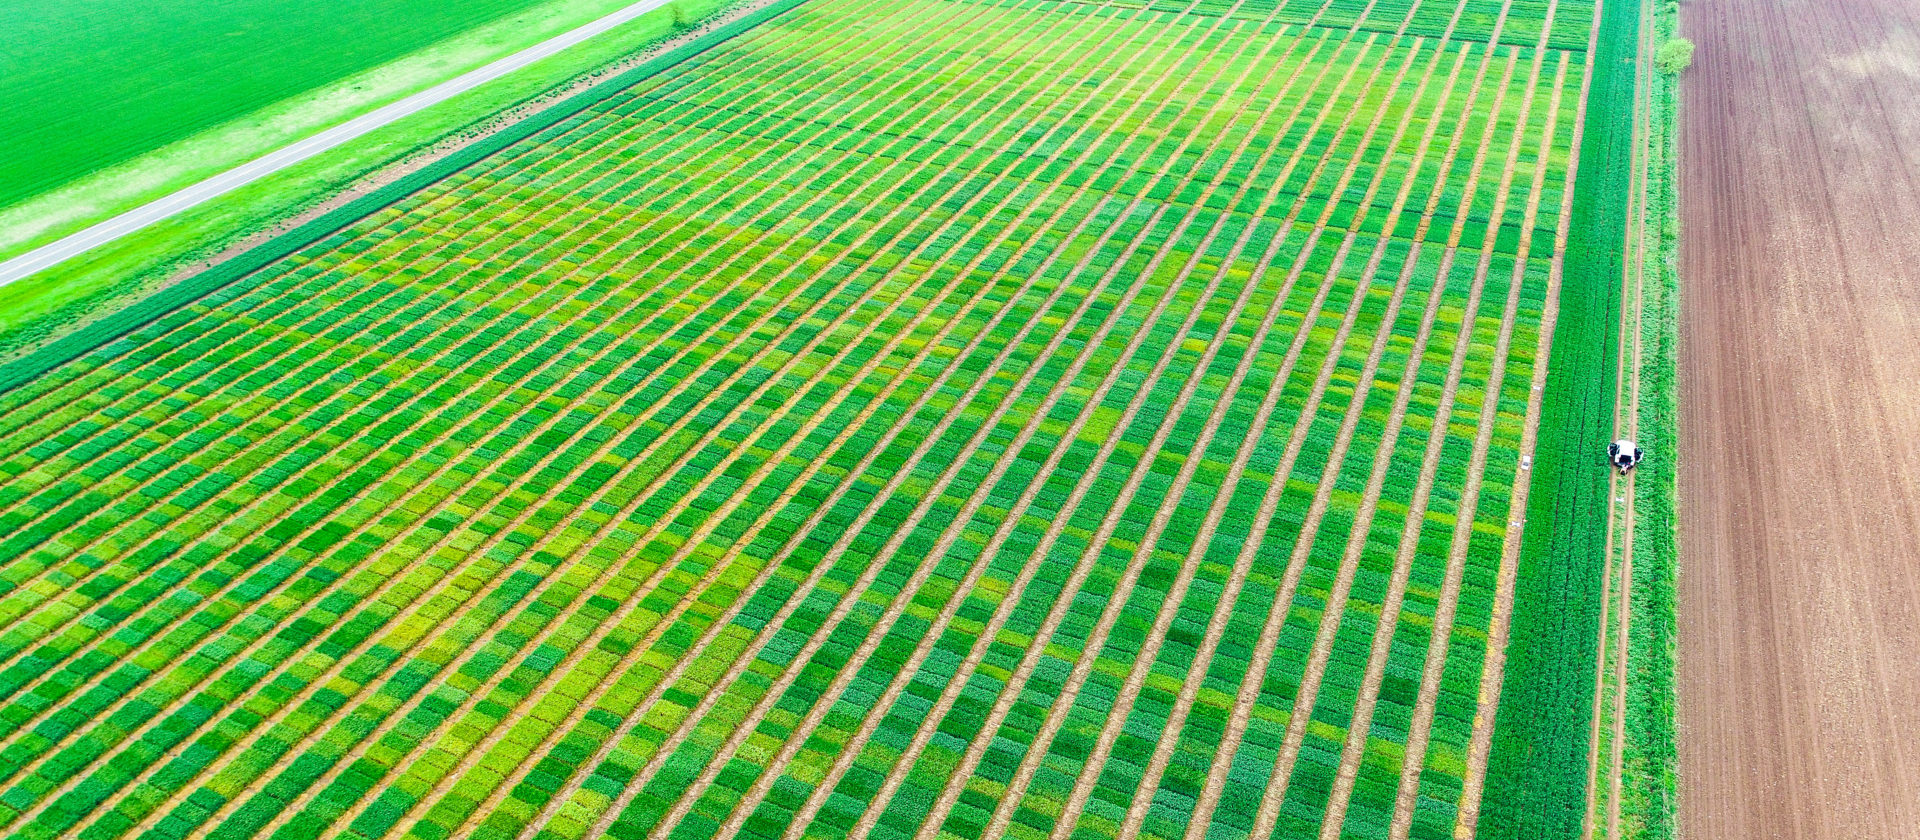 small grains field in McGregor, TX